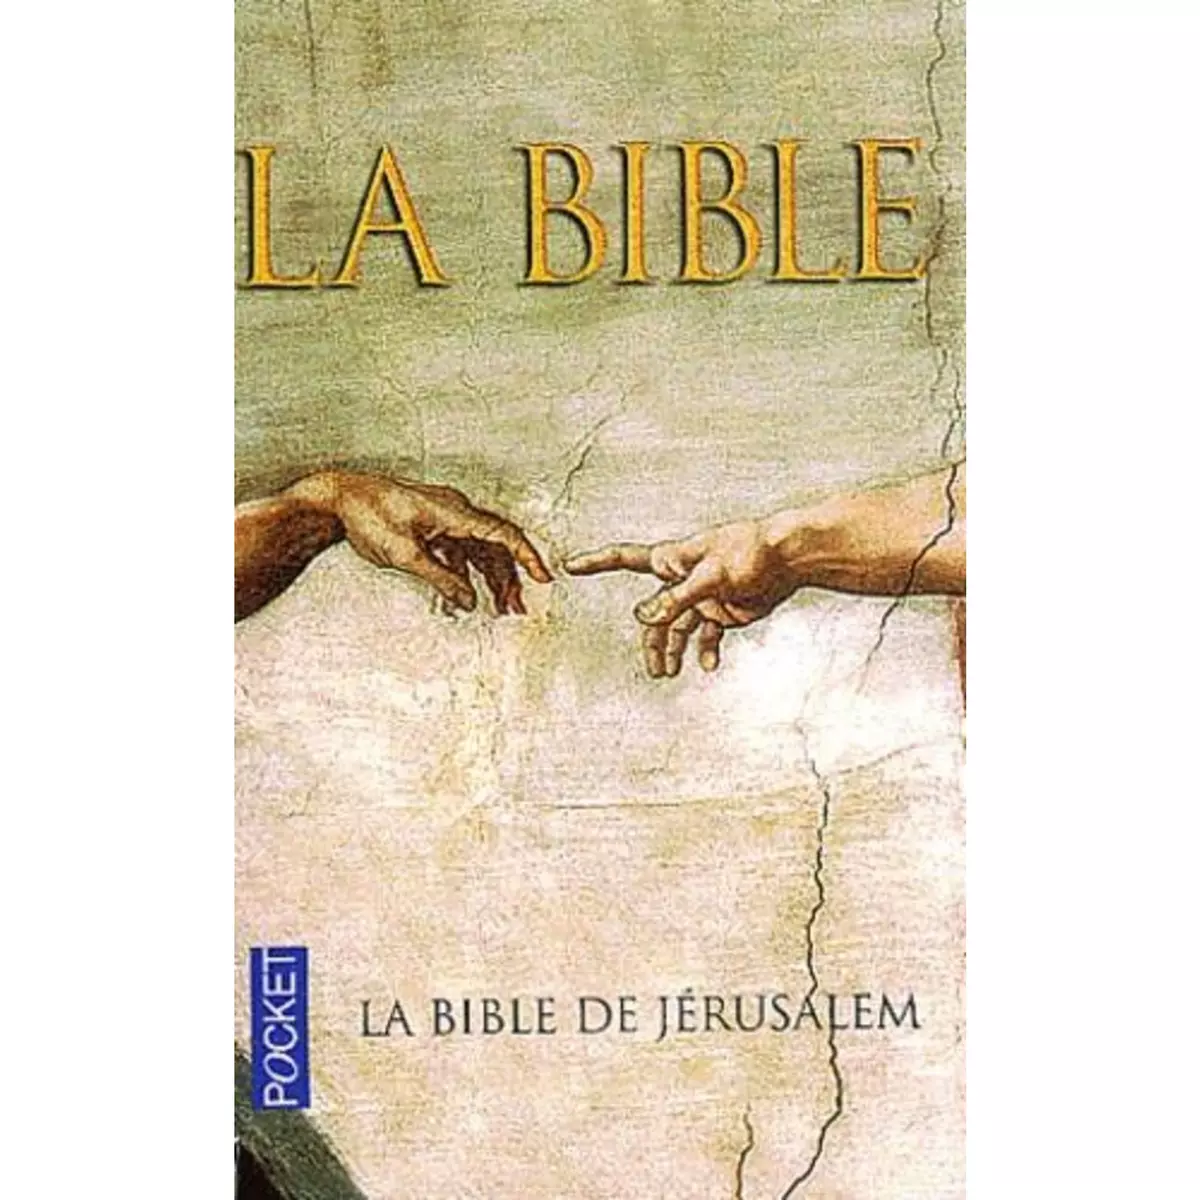  LA BIBLE DE JERUSALEM, Ecole biblique de Jérusalem